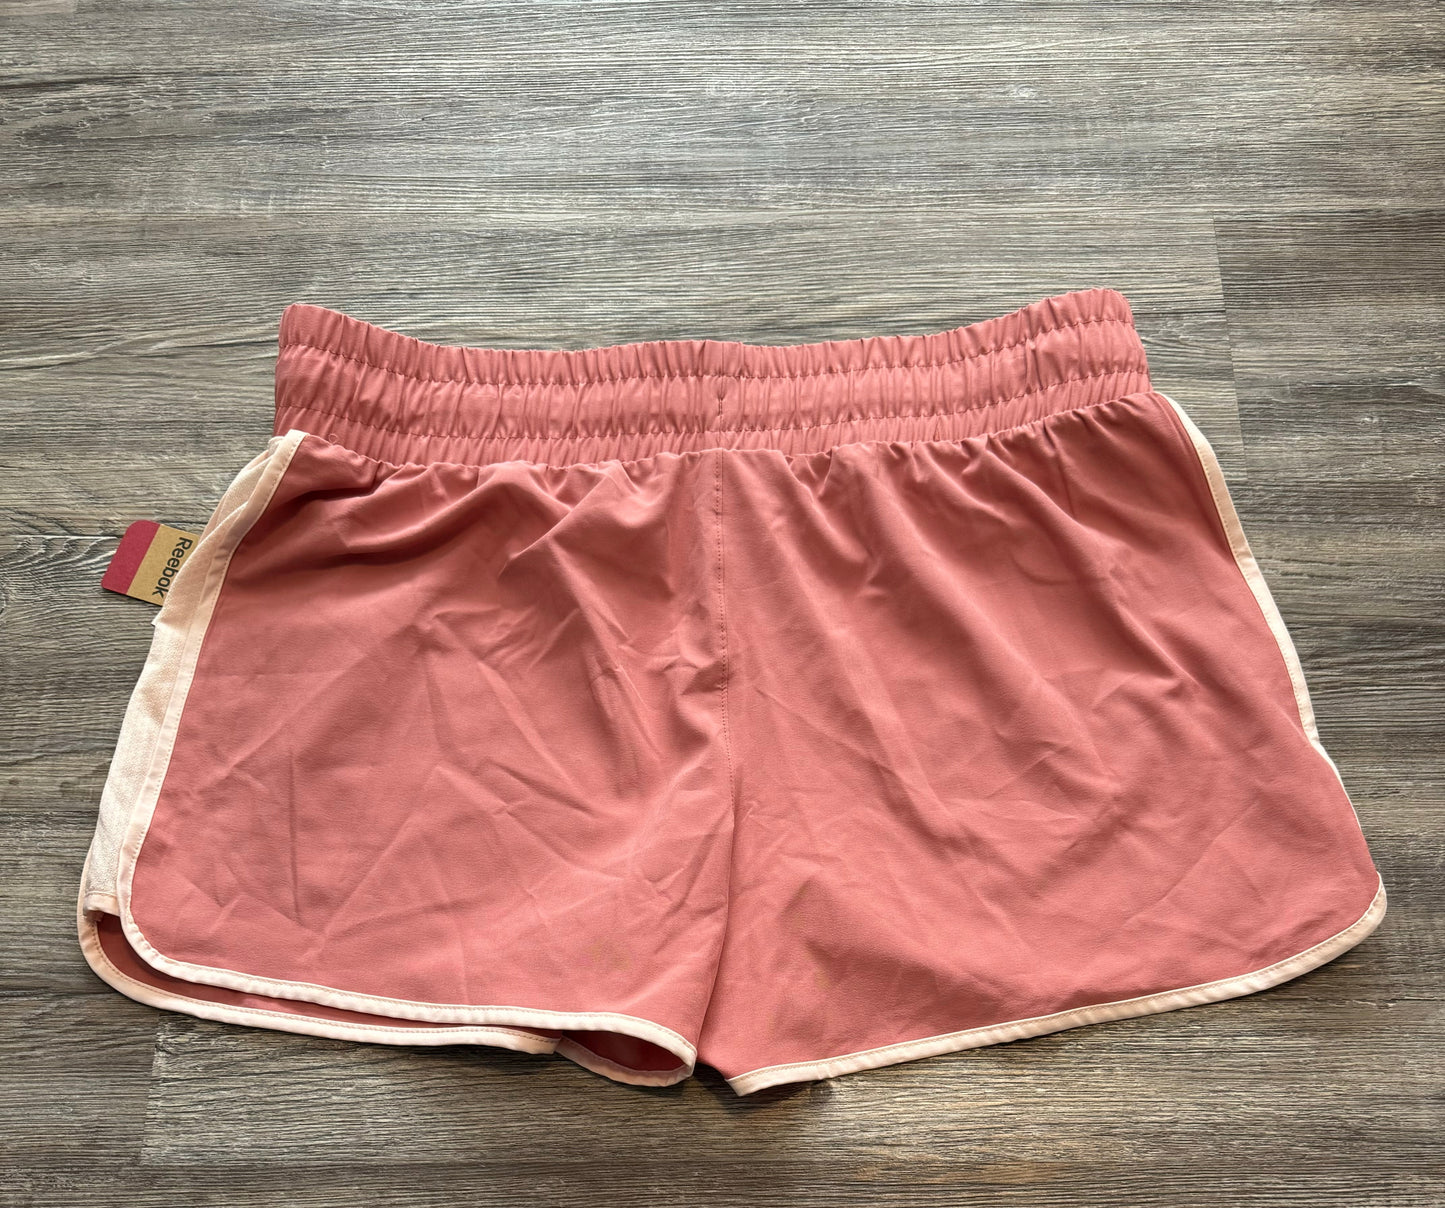 Athletic Shorts By Reebok  Size: Xxl